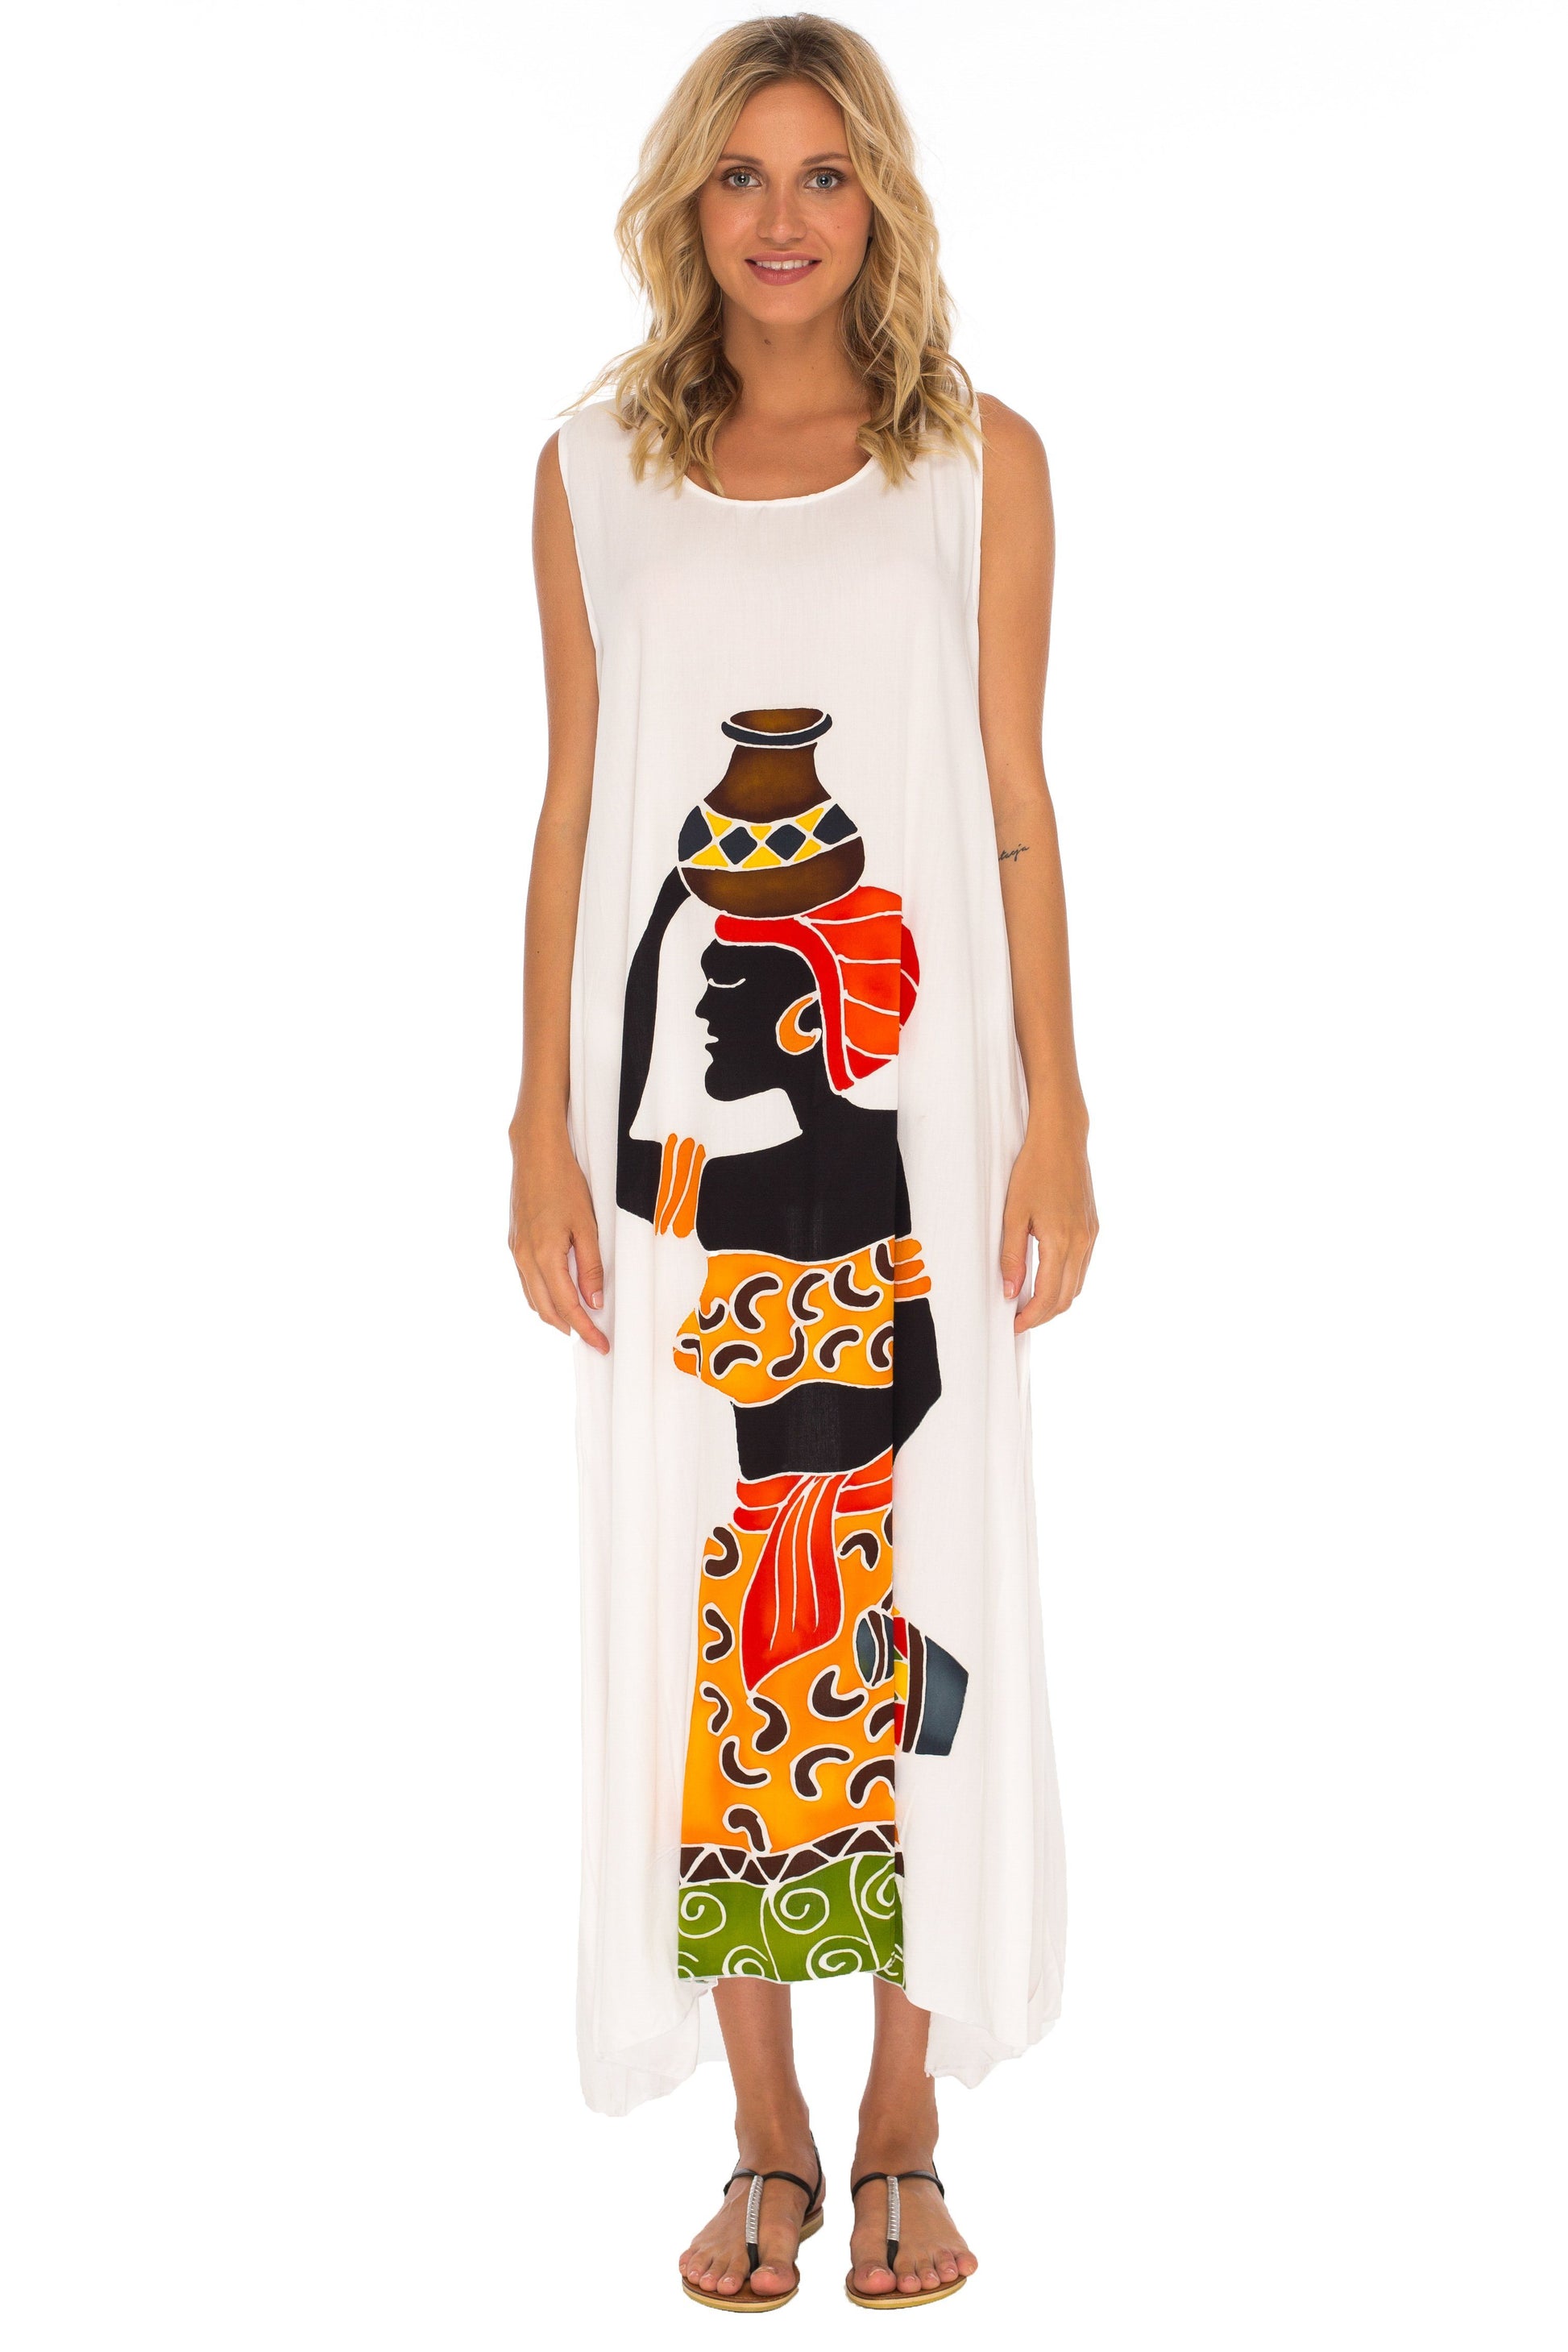 Sleeveless Summer Tank Dress with Hand-painted Tribal Design - Love-ShuShi-white dress-Shu-Shi